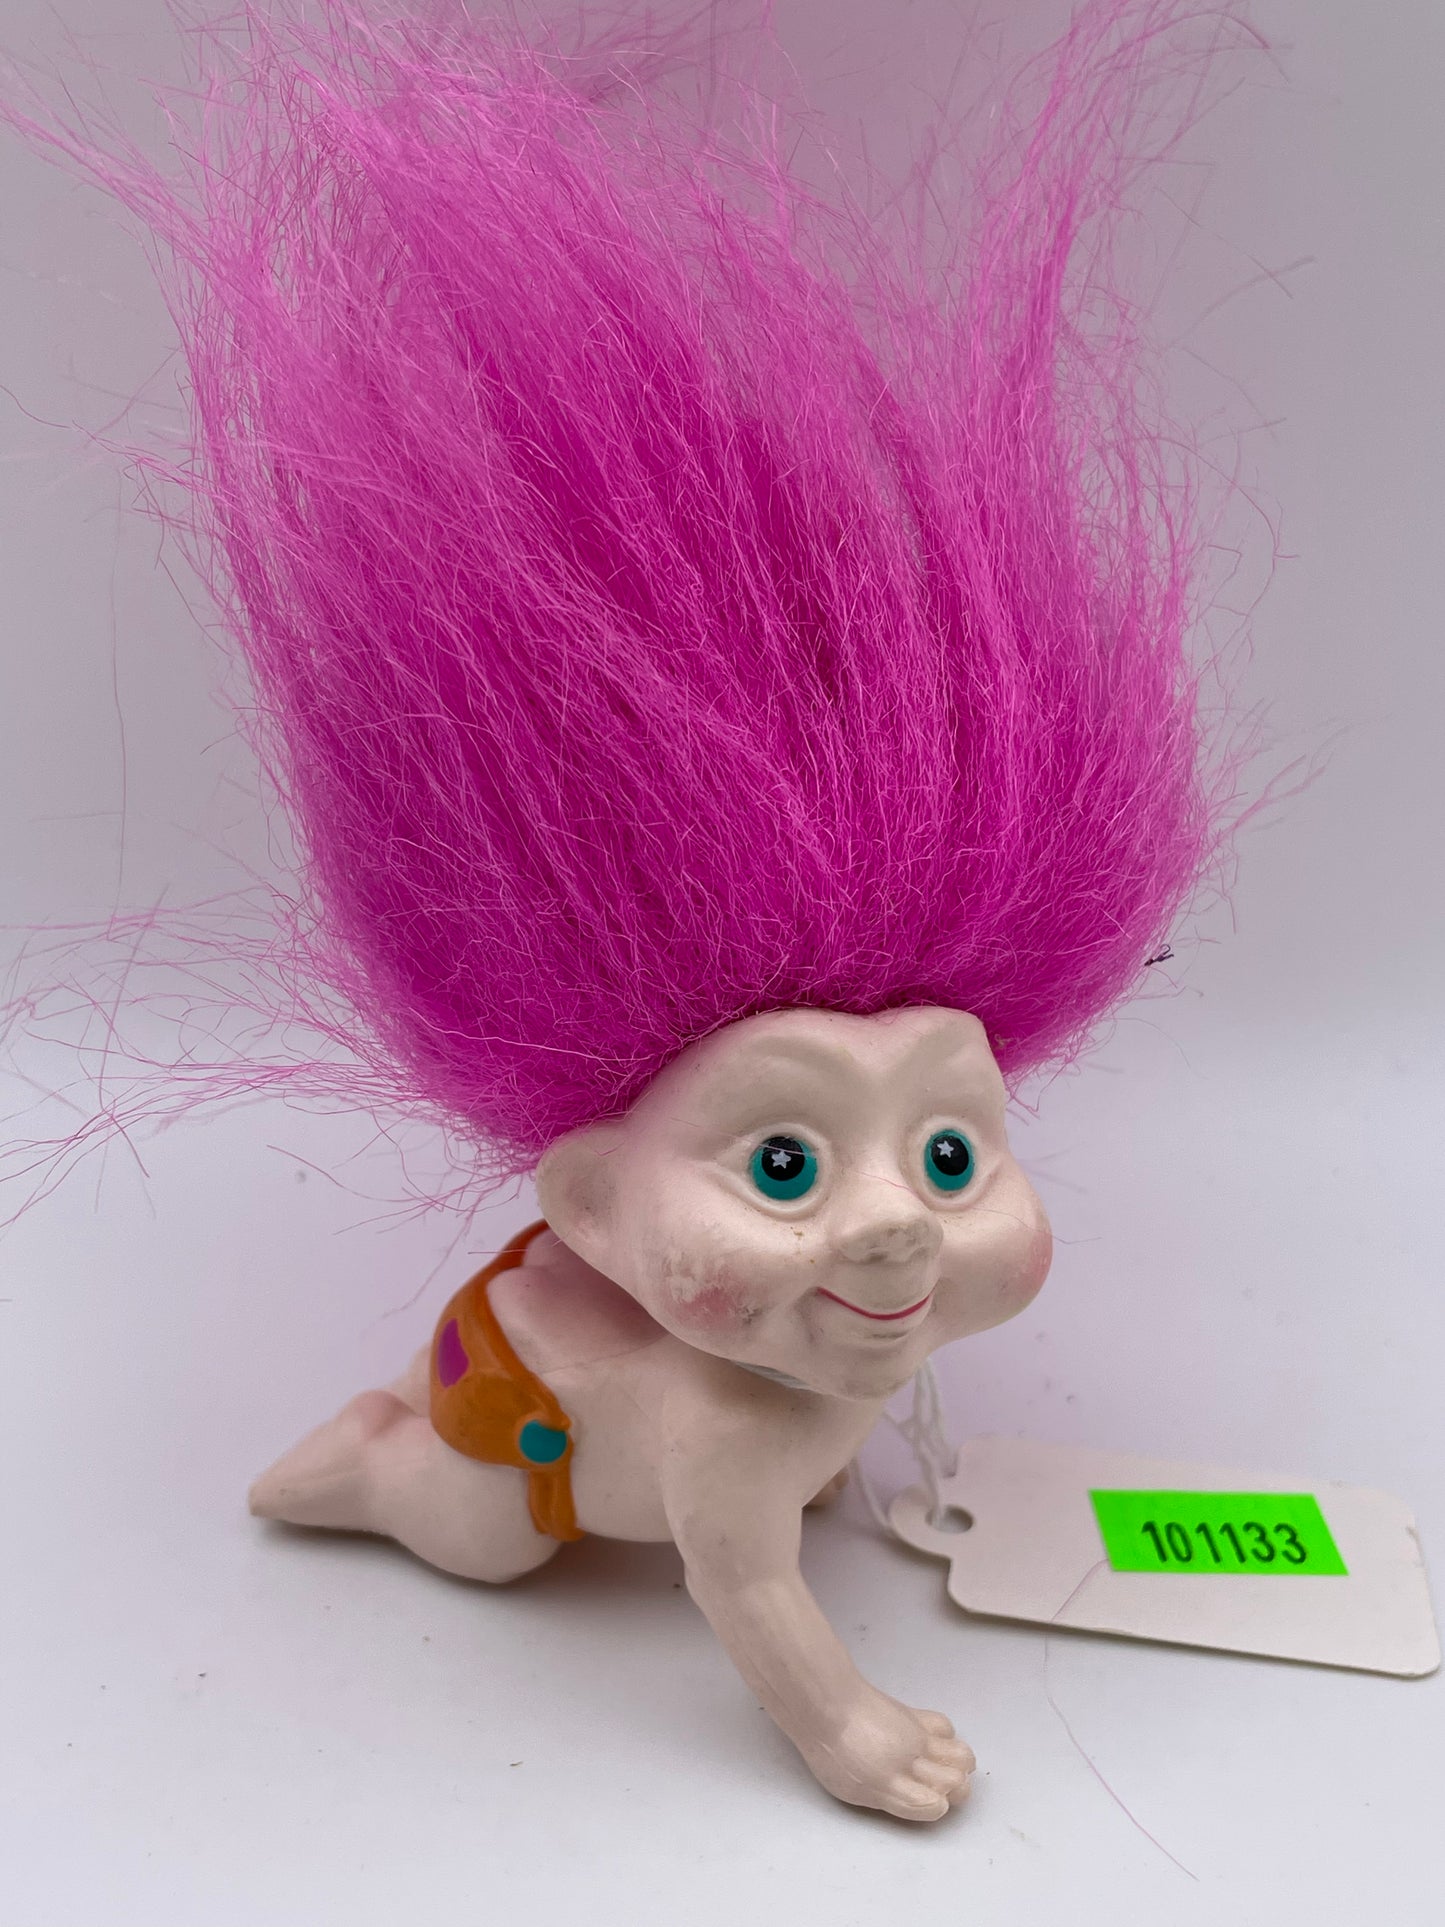 Trolls - Magic Crawling Baby - Pink Hair #101133